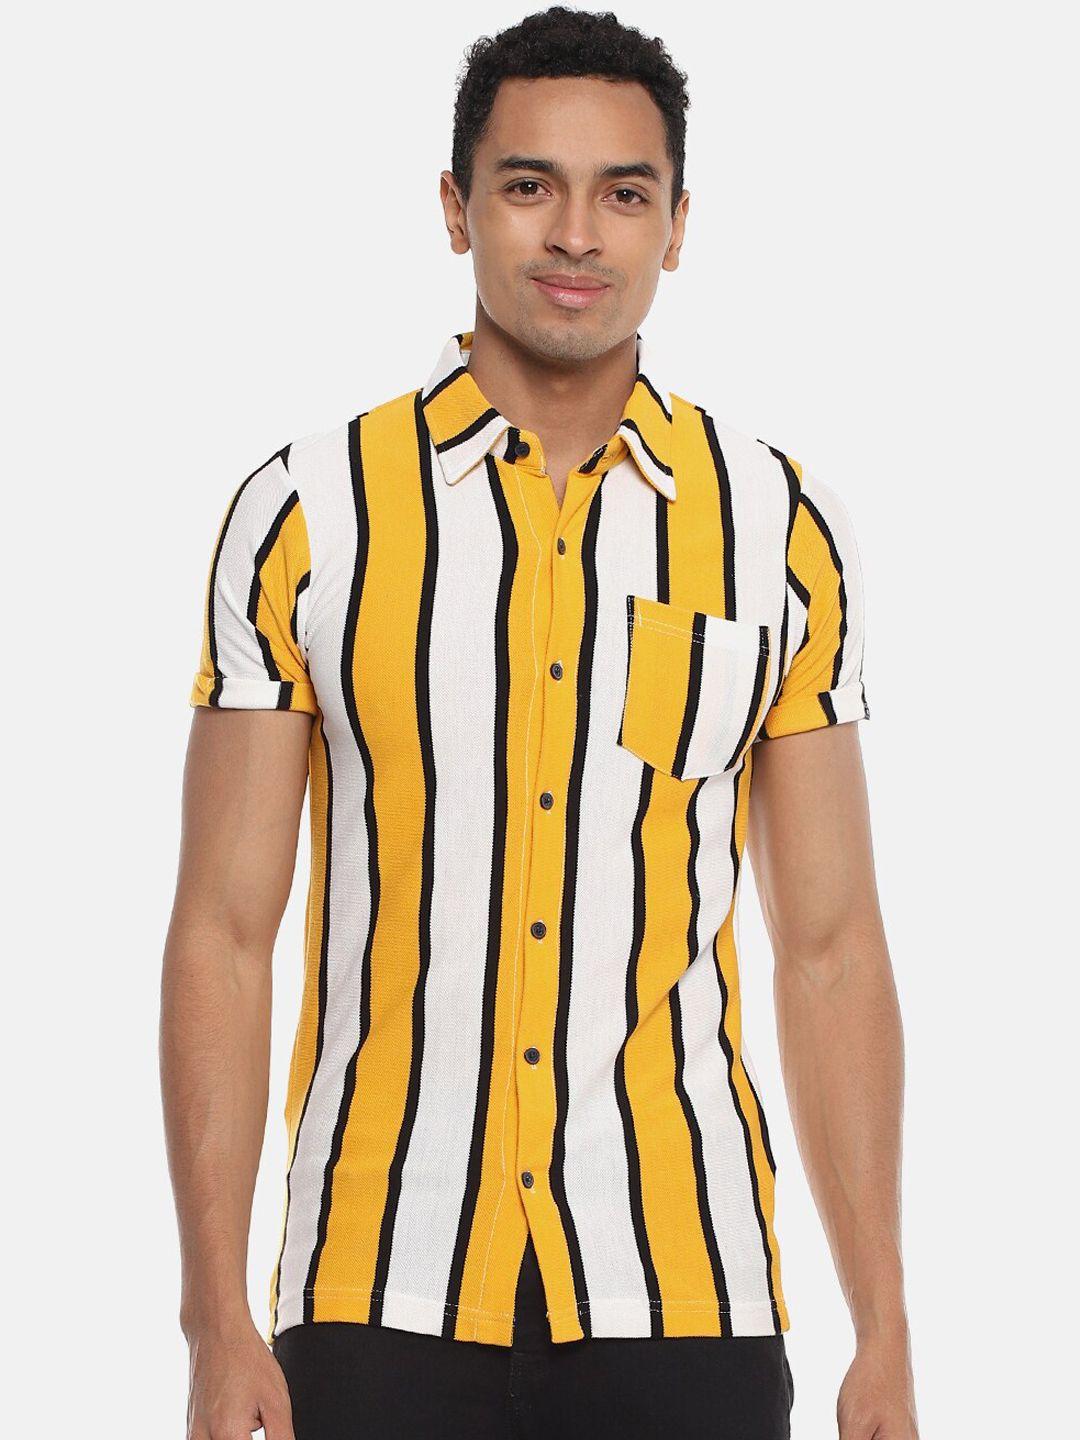 campus-sutra-men-mustard-yellow-&-white-regular-fit-striped-casual-shirt